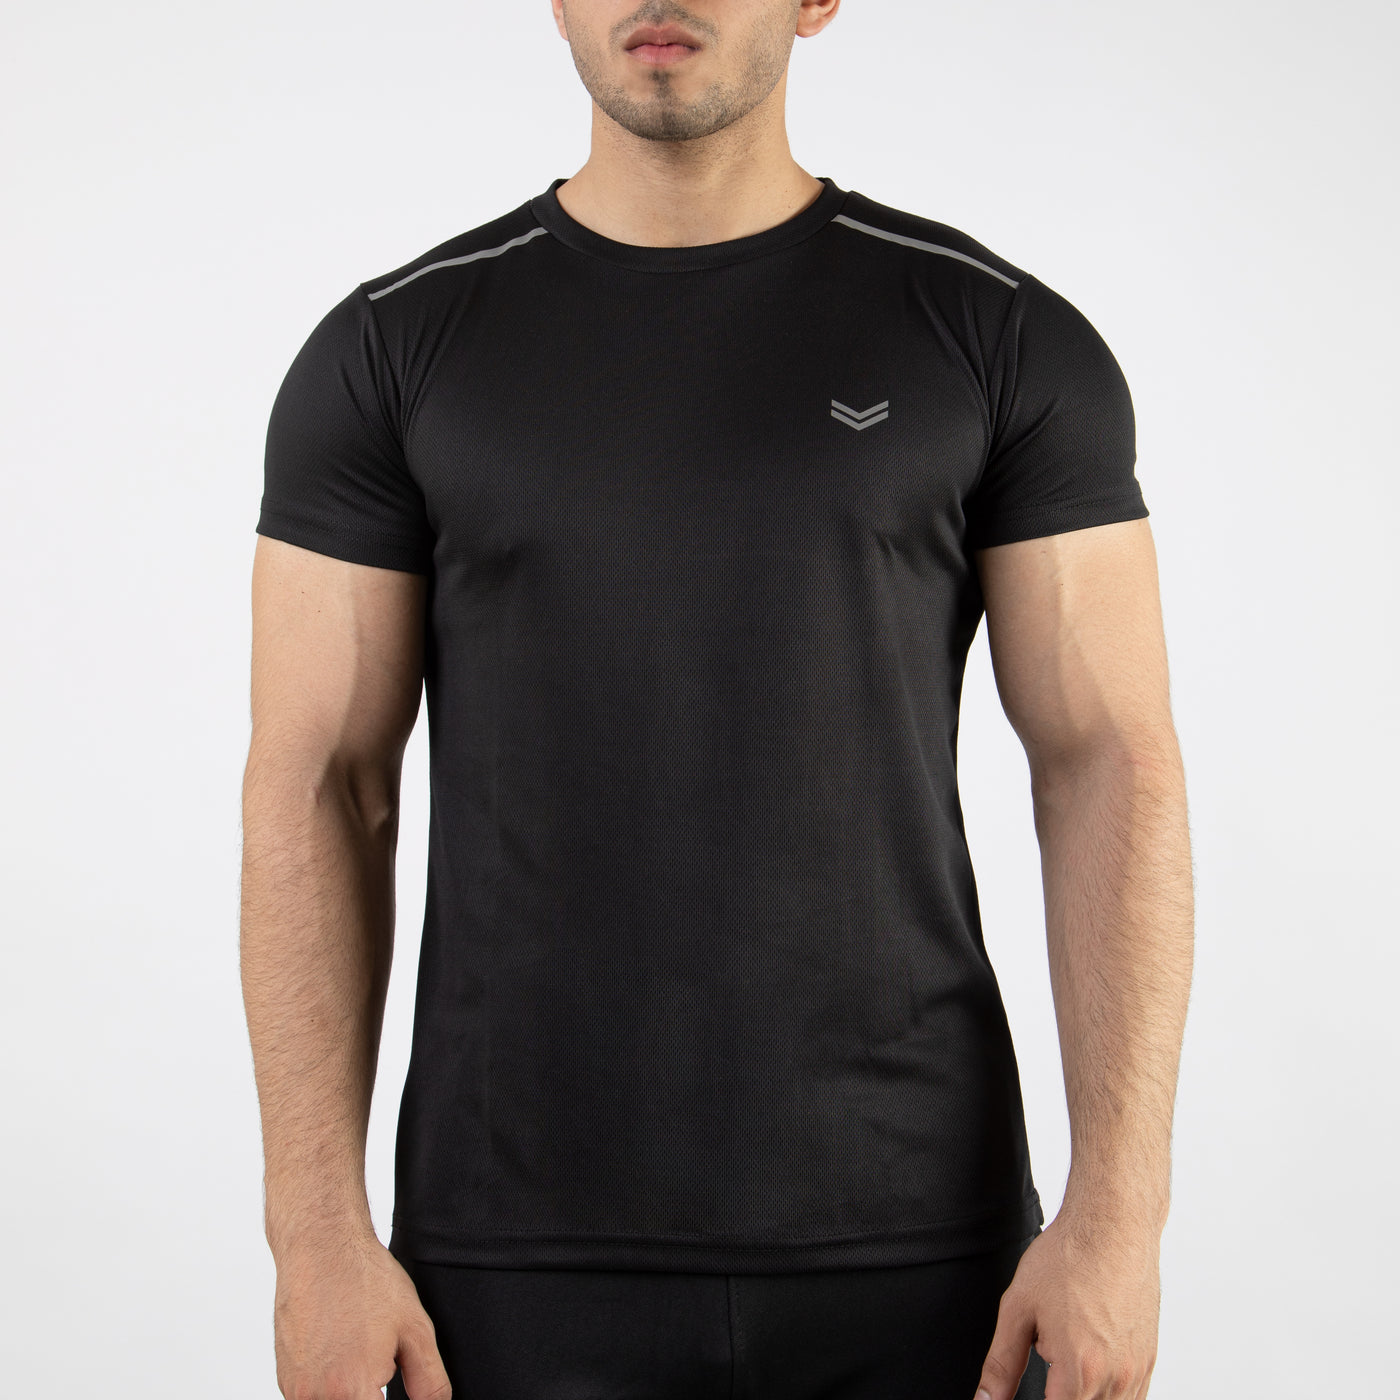 Black Mesh Quick Dry T-Shirt with Shoulder Reflectors